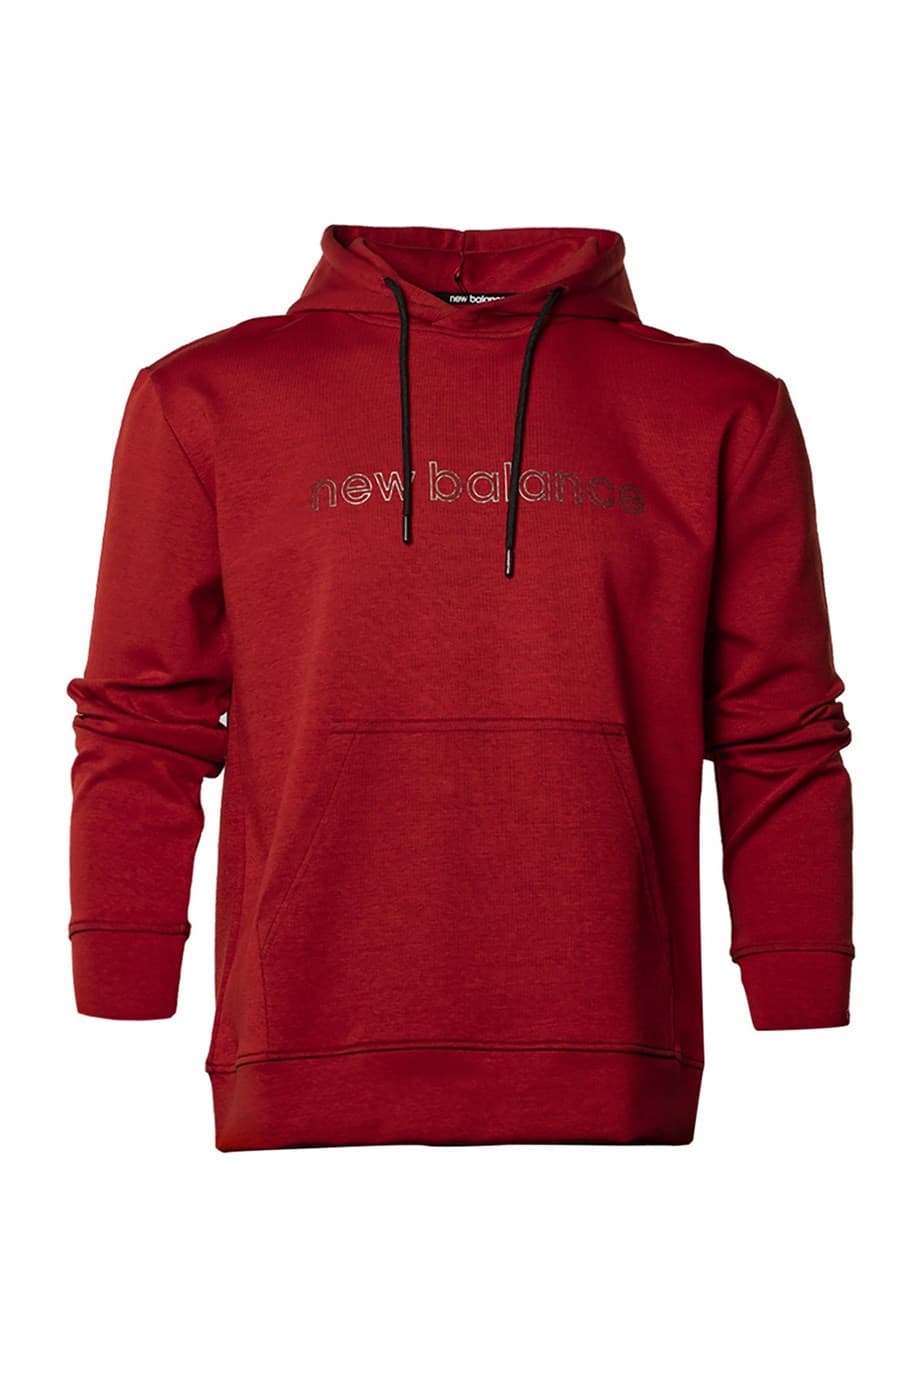 Erkek Kırmızı Kapüşonlu Sweatshirt (MPH3144-CHR)